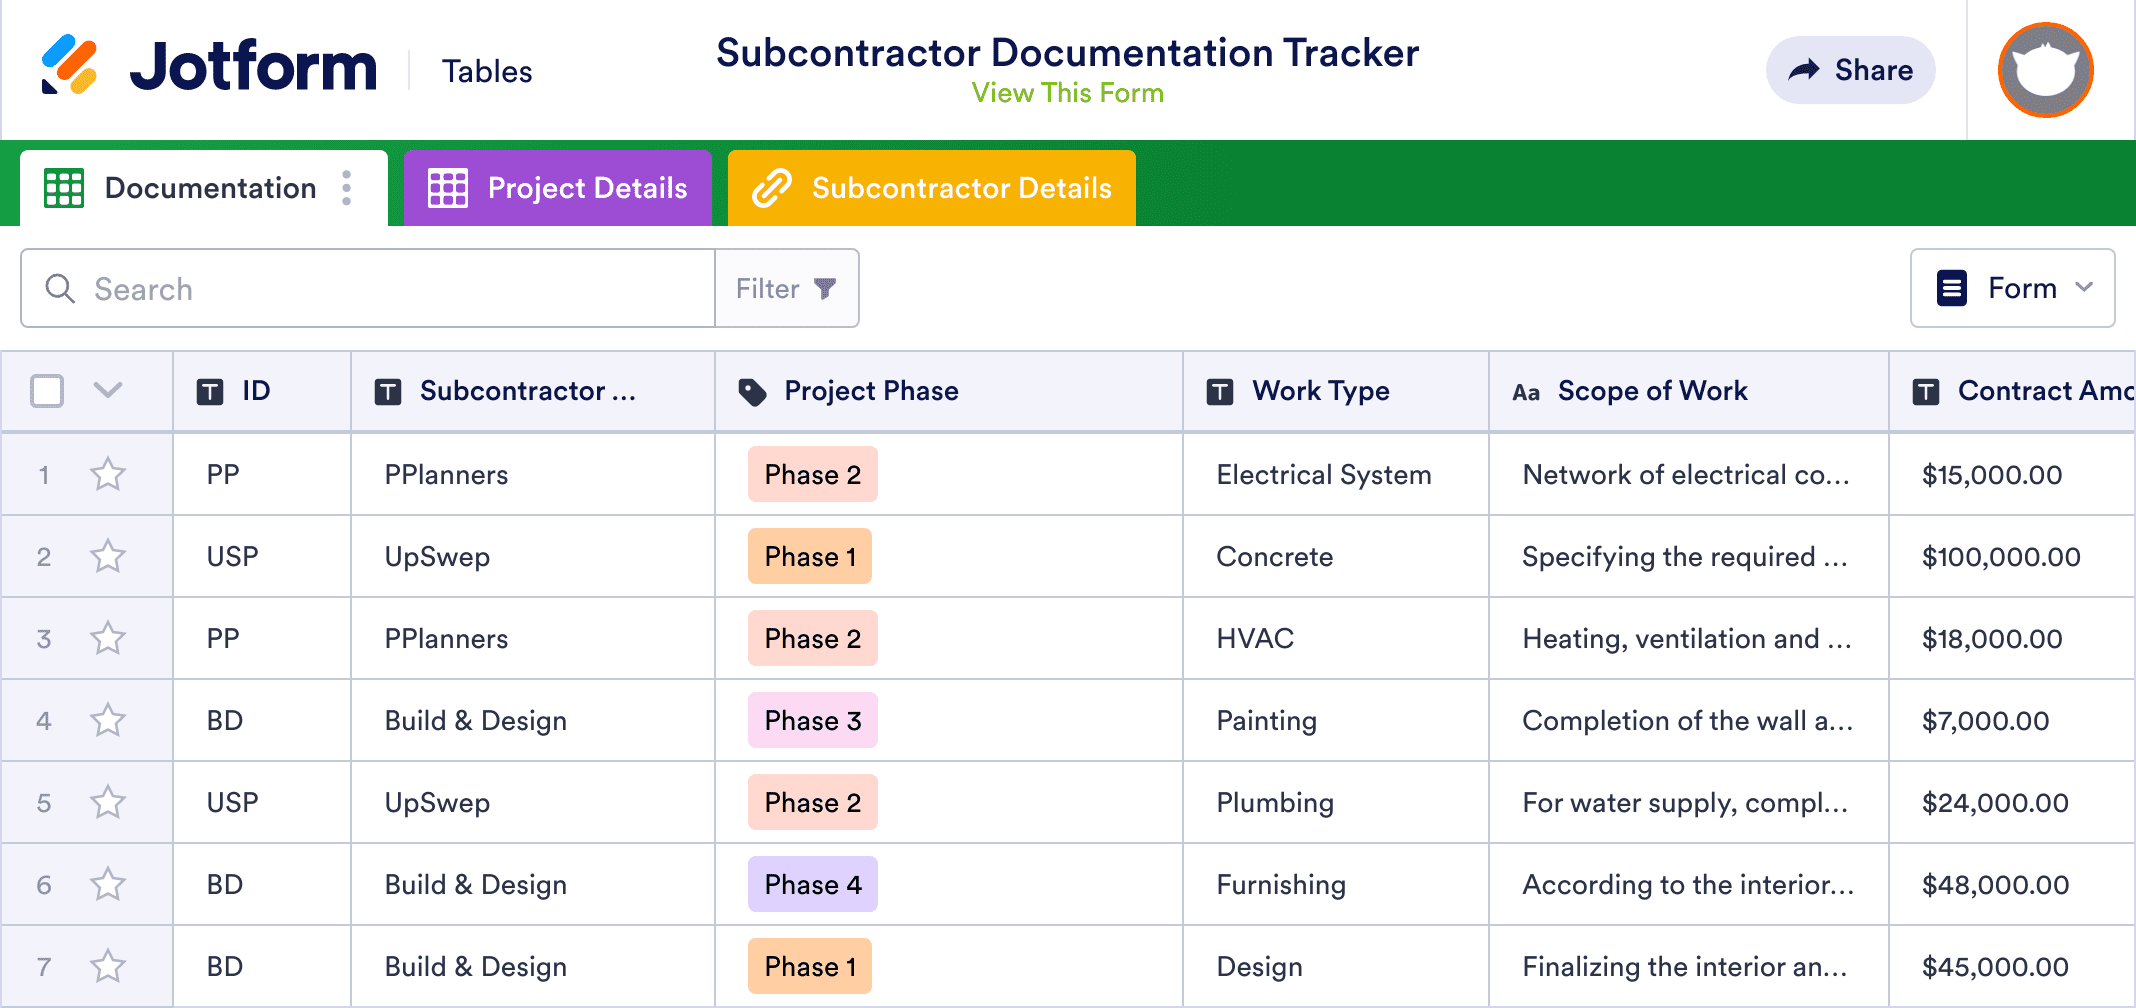 Subcontractor Documentation Tracker